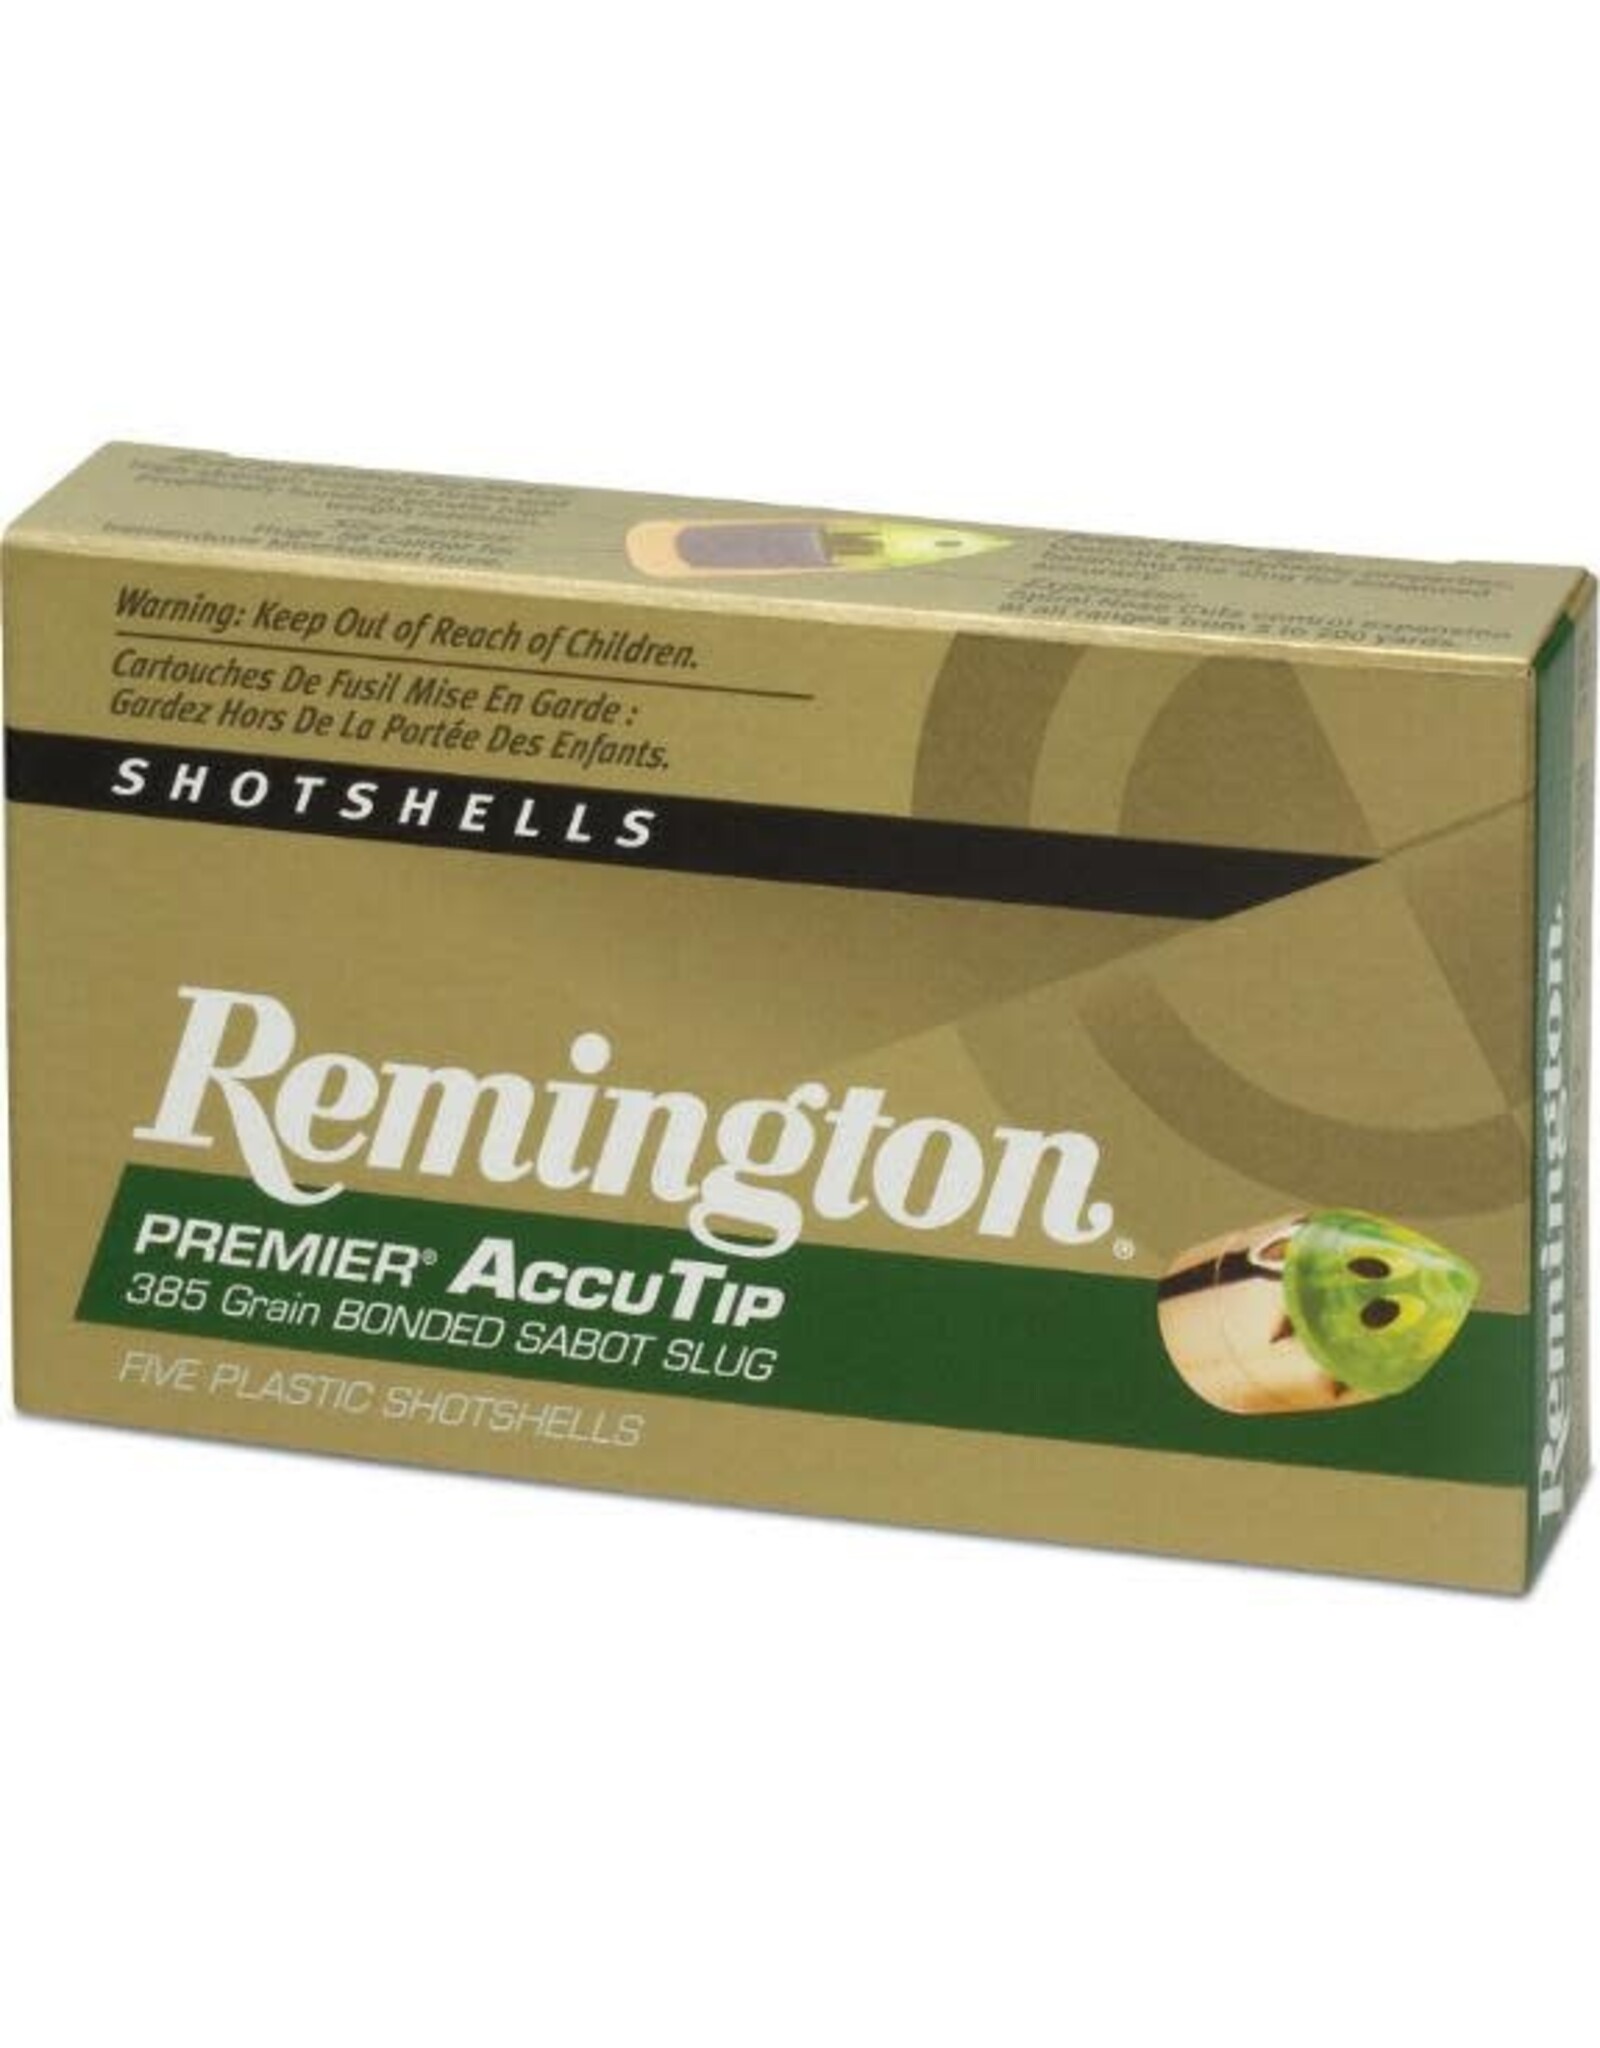 Remington Remington 20731 Premier Accutip Bonded Sabot Slugs 12 GA, 3 in, 7/8oz, 1900 fps, 5 Rnd per Box